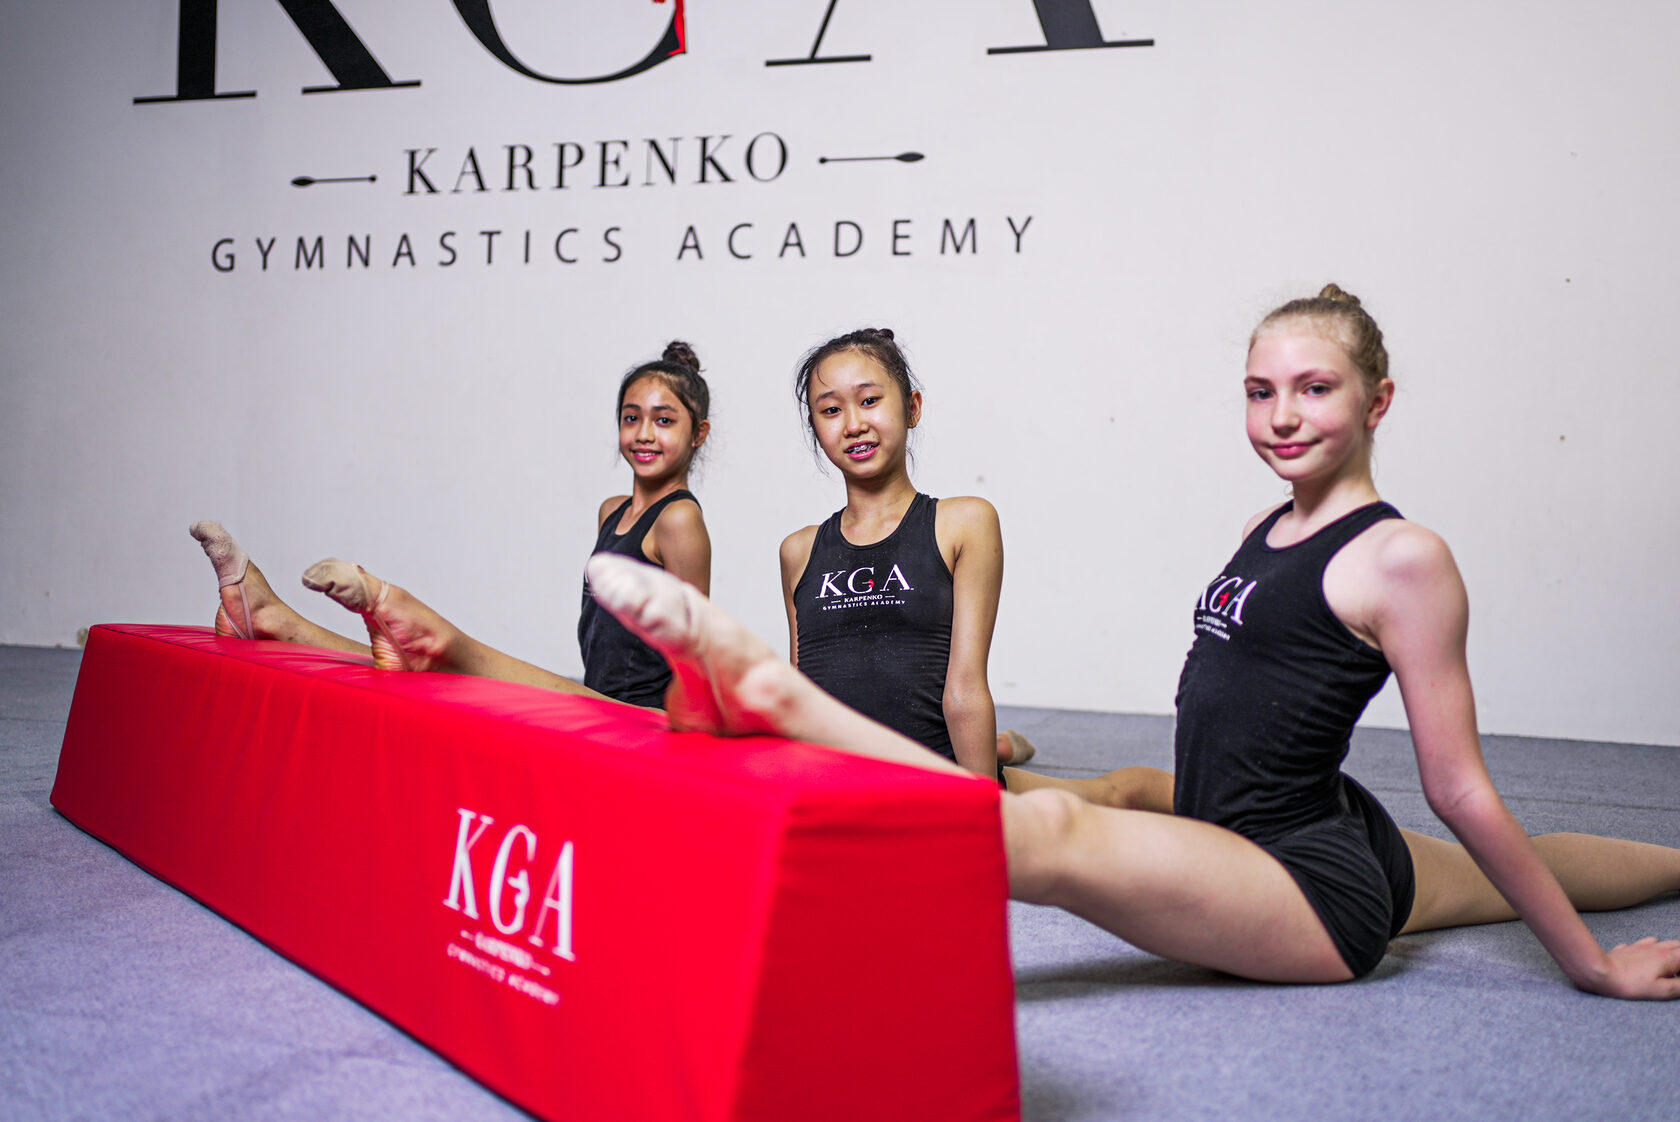 KGA Singapore – Karpenko Gymnastics Academy News – Open classes in February